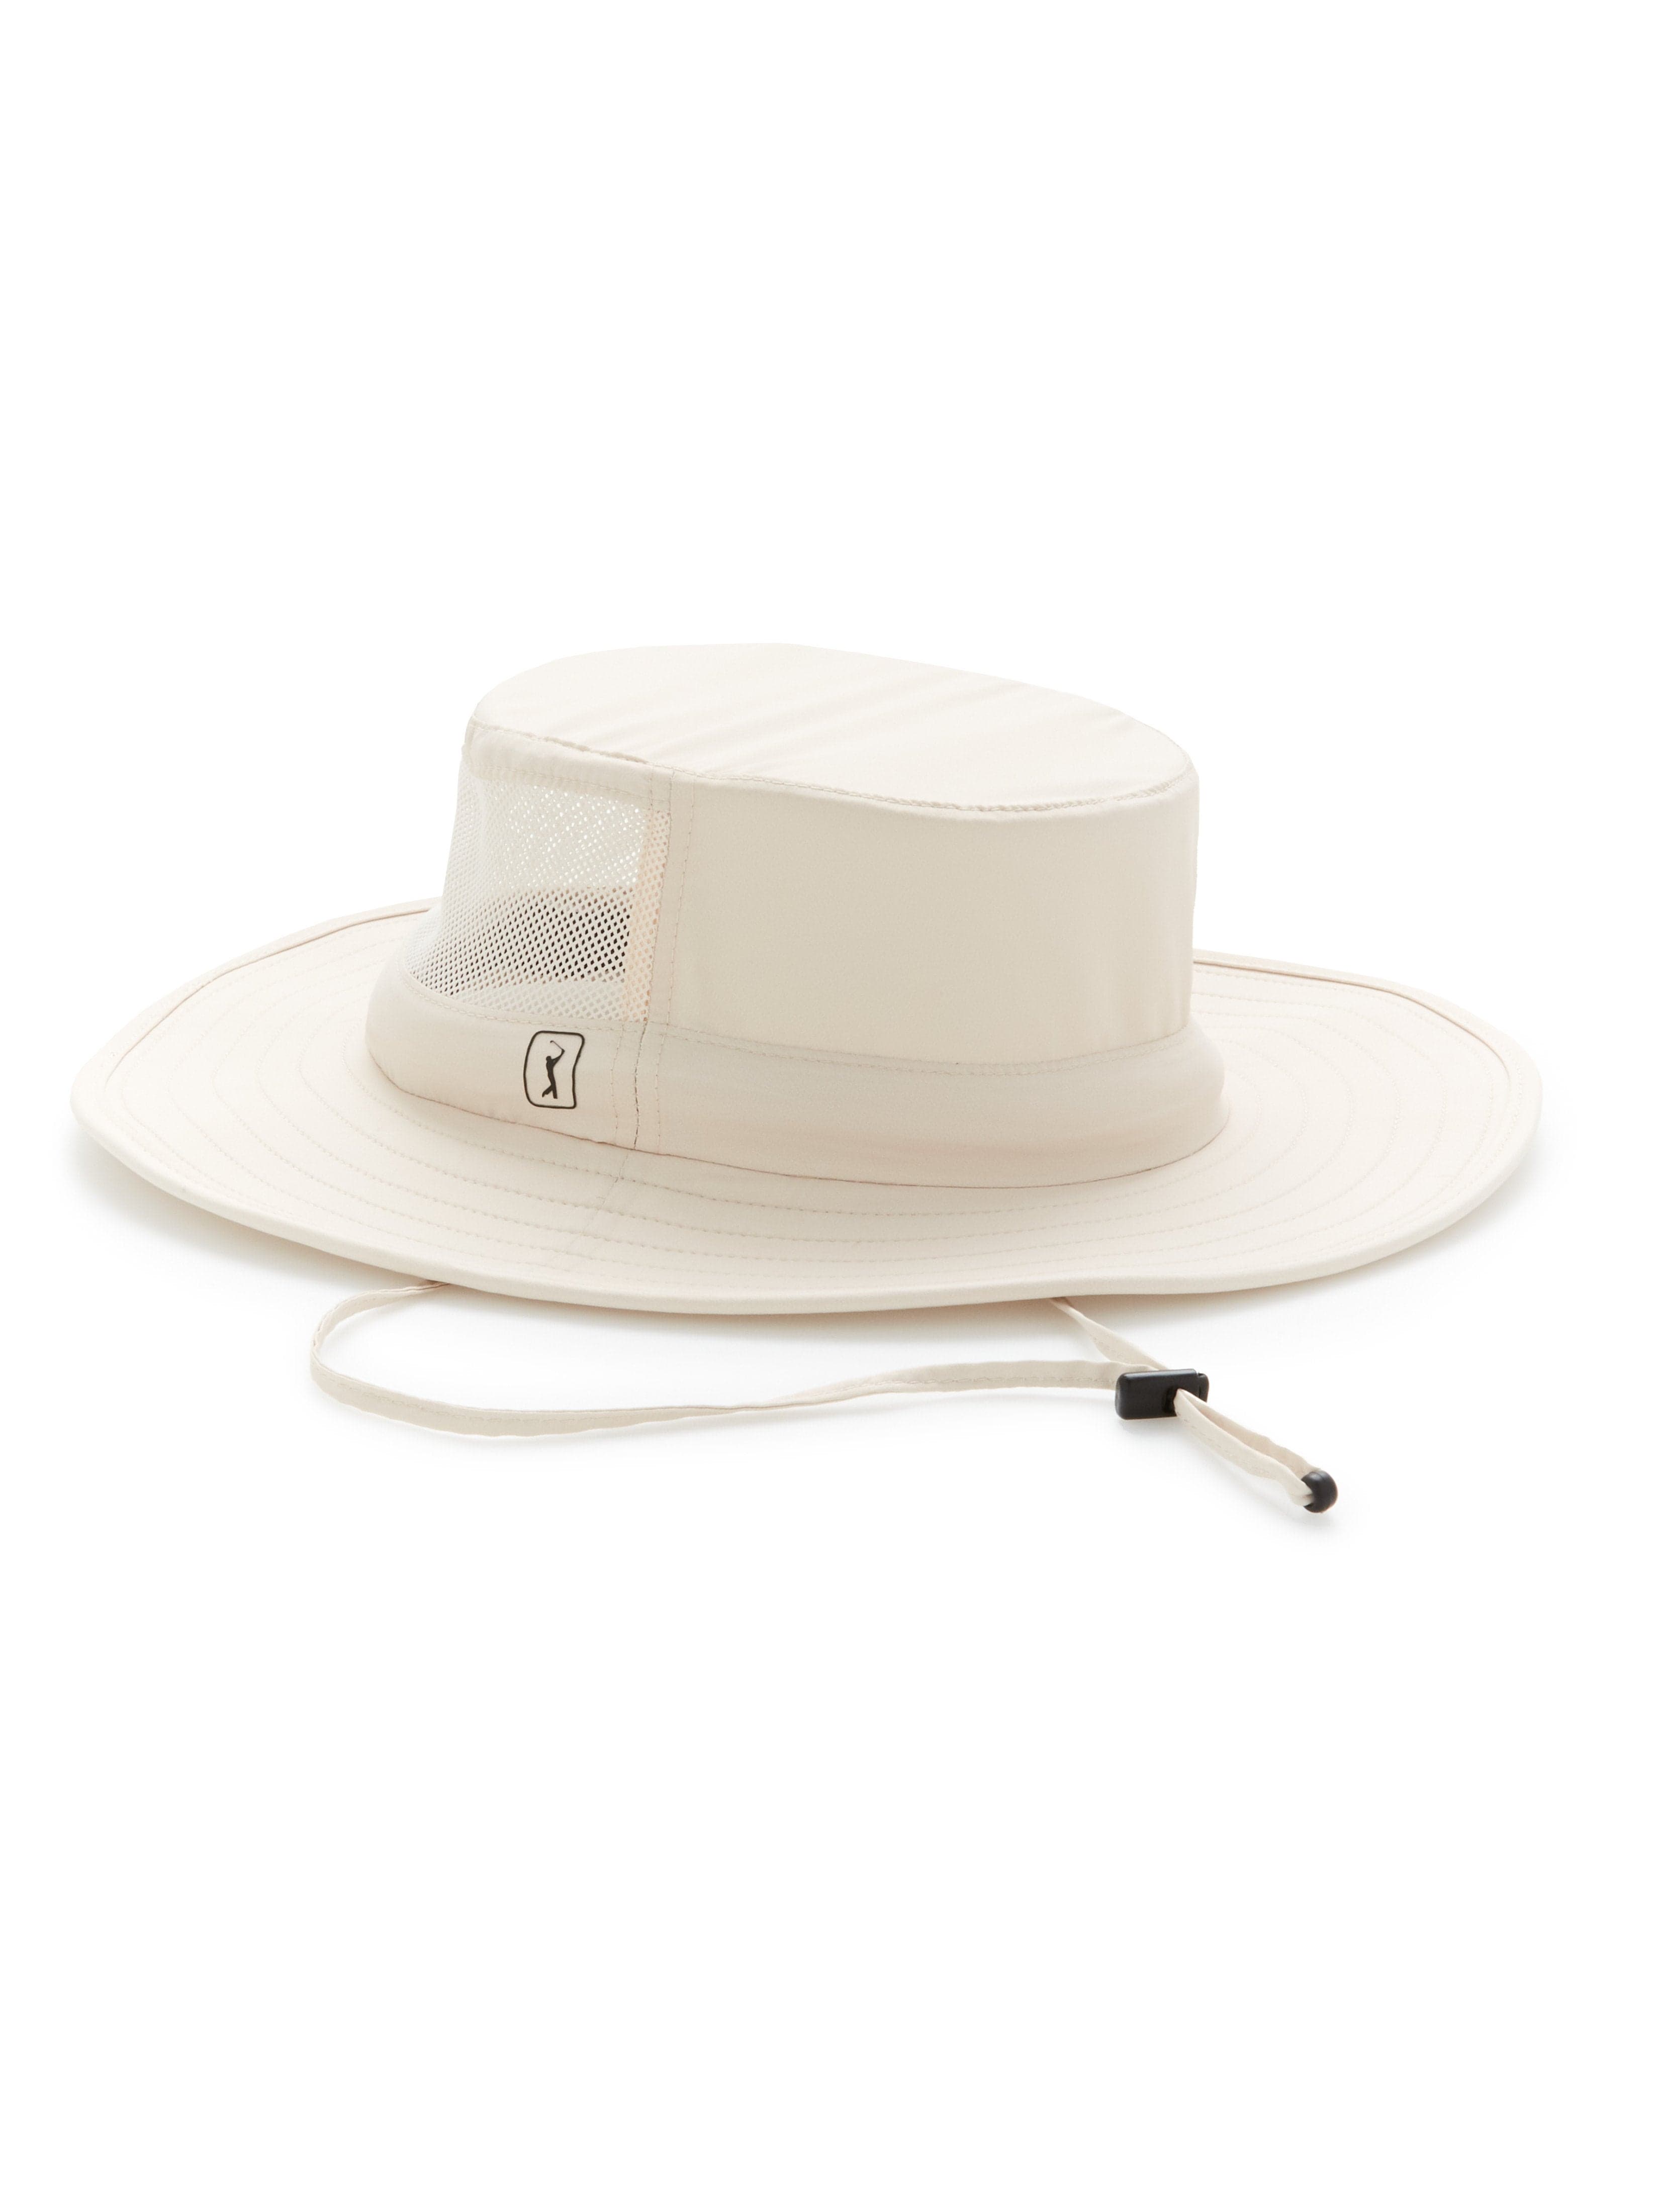 PGA TOUR Apparel Solar Boonie Hat, Silver Lining White, 100% Polyester | Golf Apparel Shop